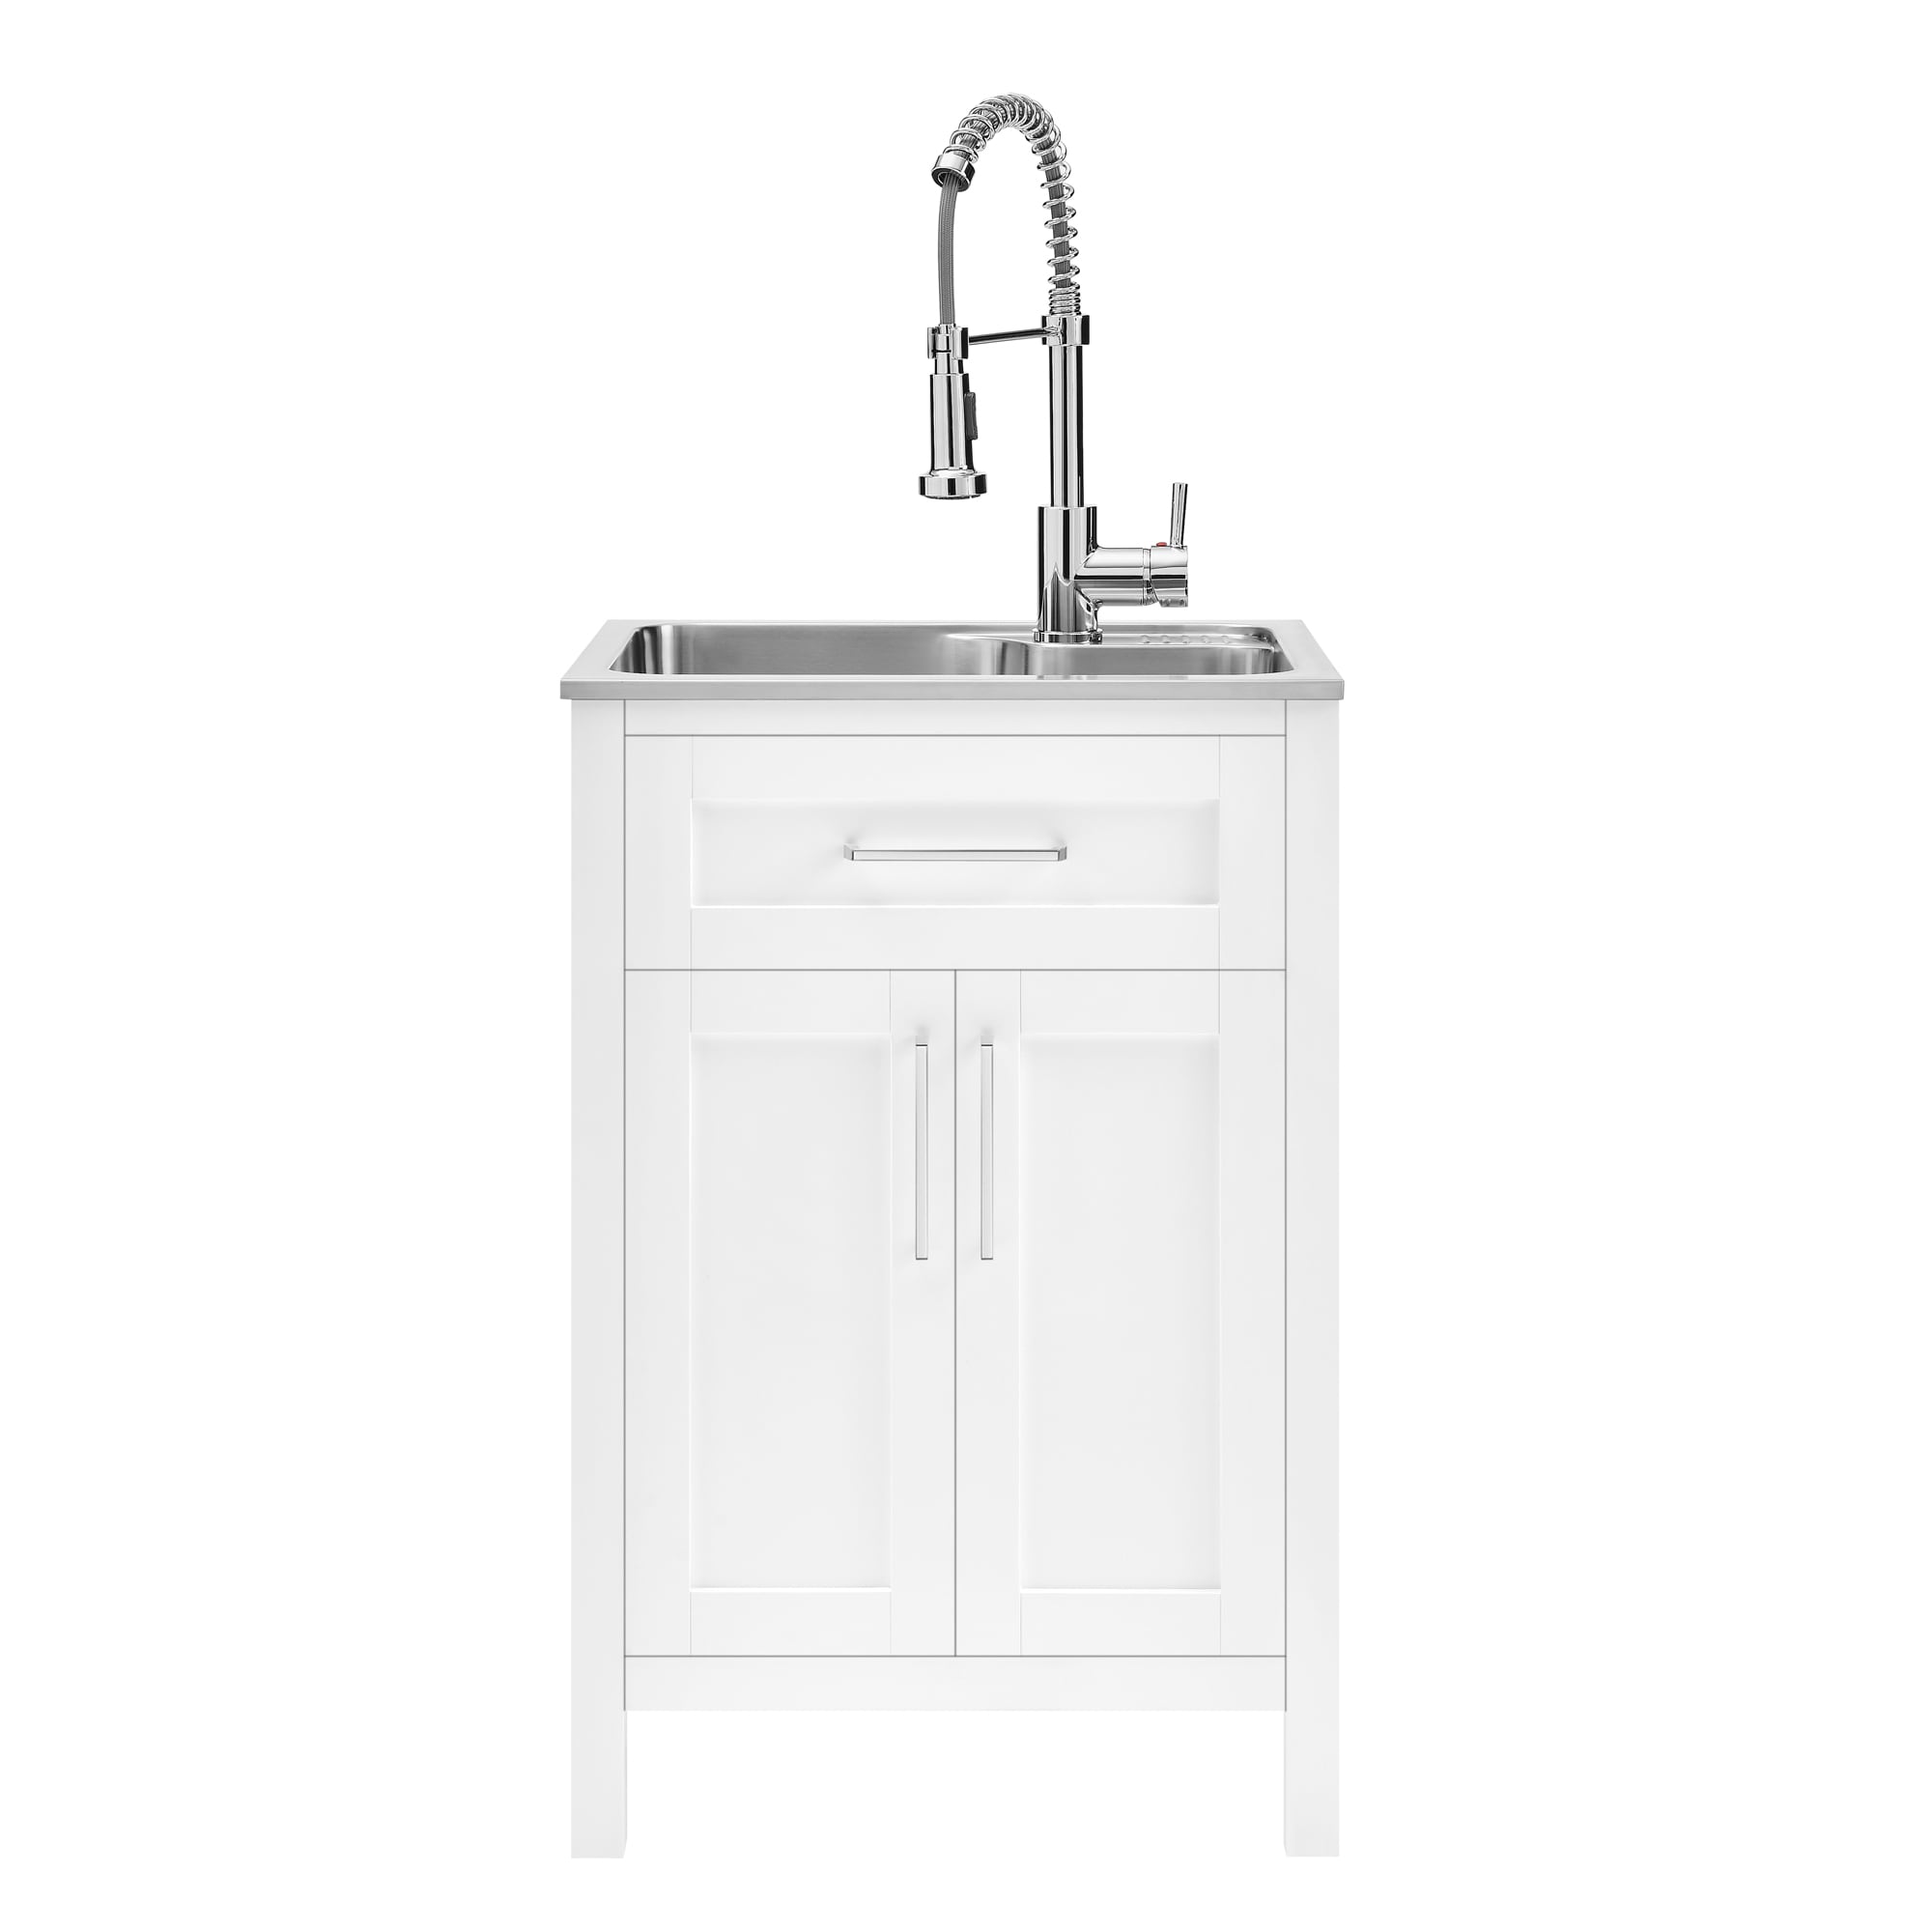 CHICIEVE Acrylic Bathroom Sink Shelf Over Faucet for Small  Bathroom,Kitchen,Laundry Room,Farmhouse, RV (1 Set)